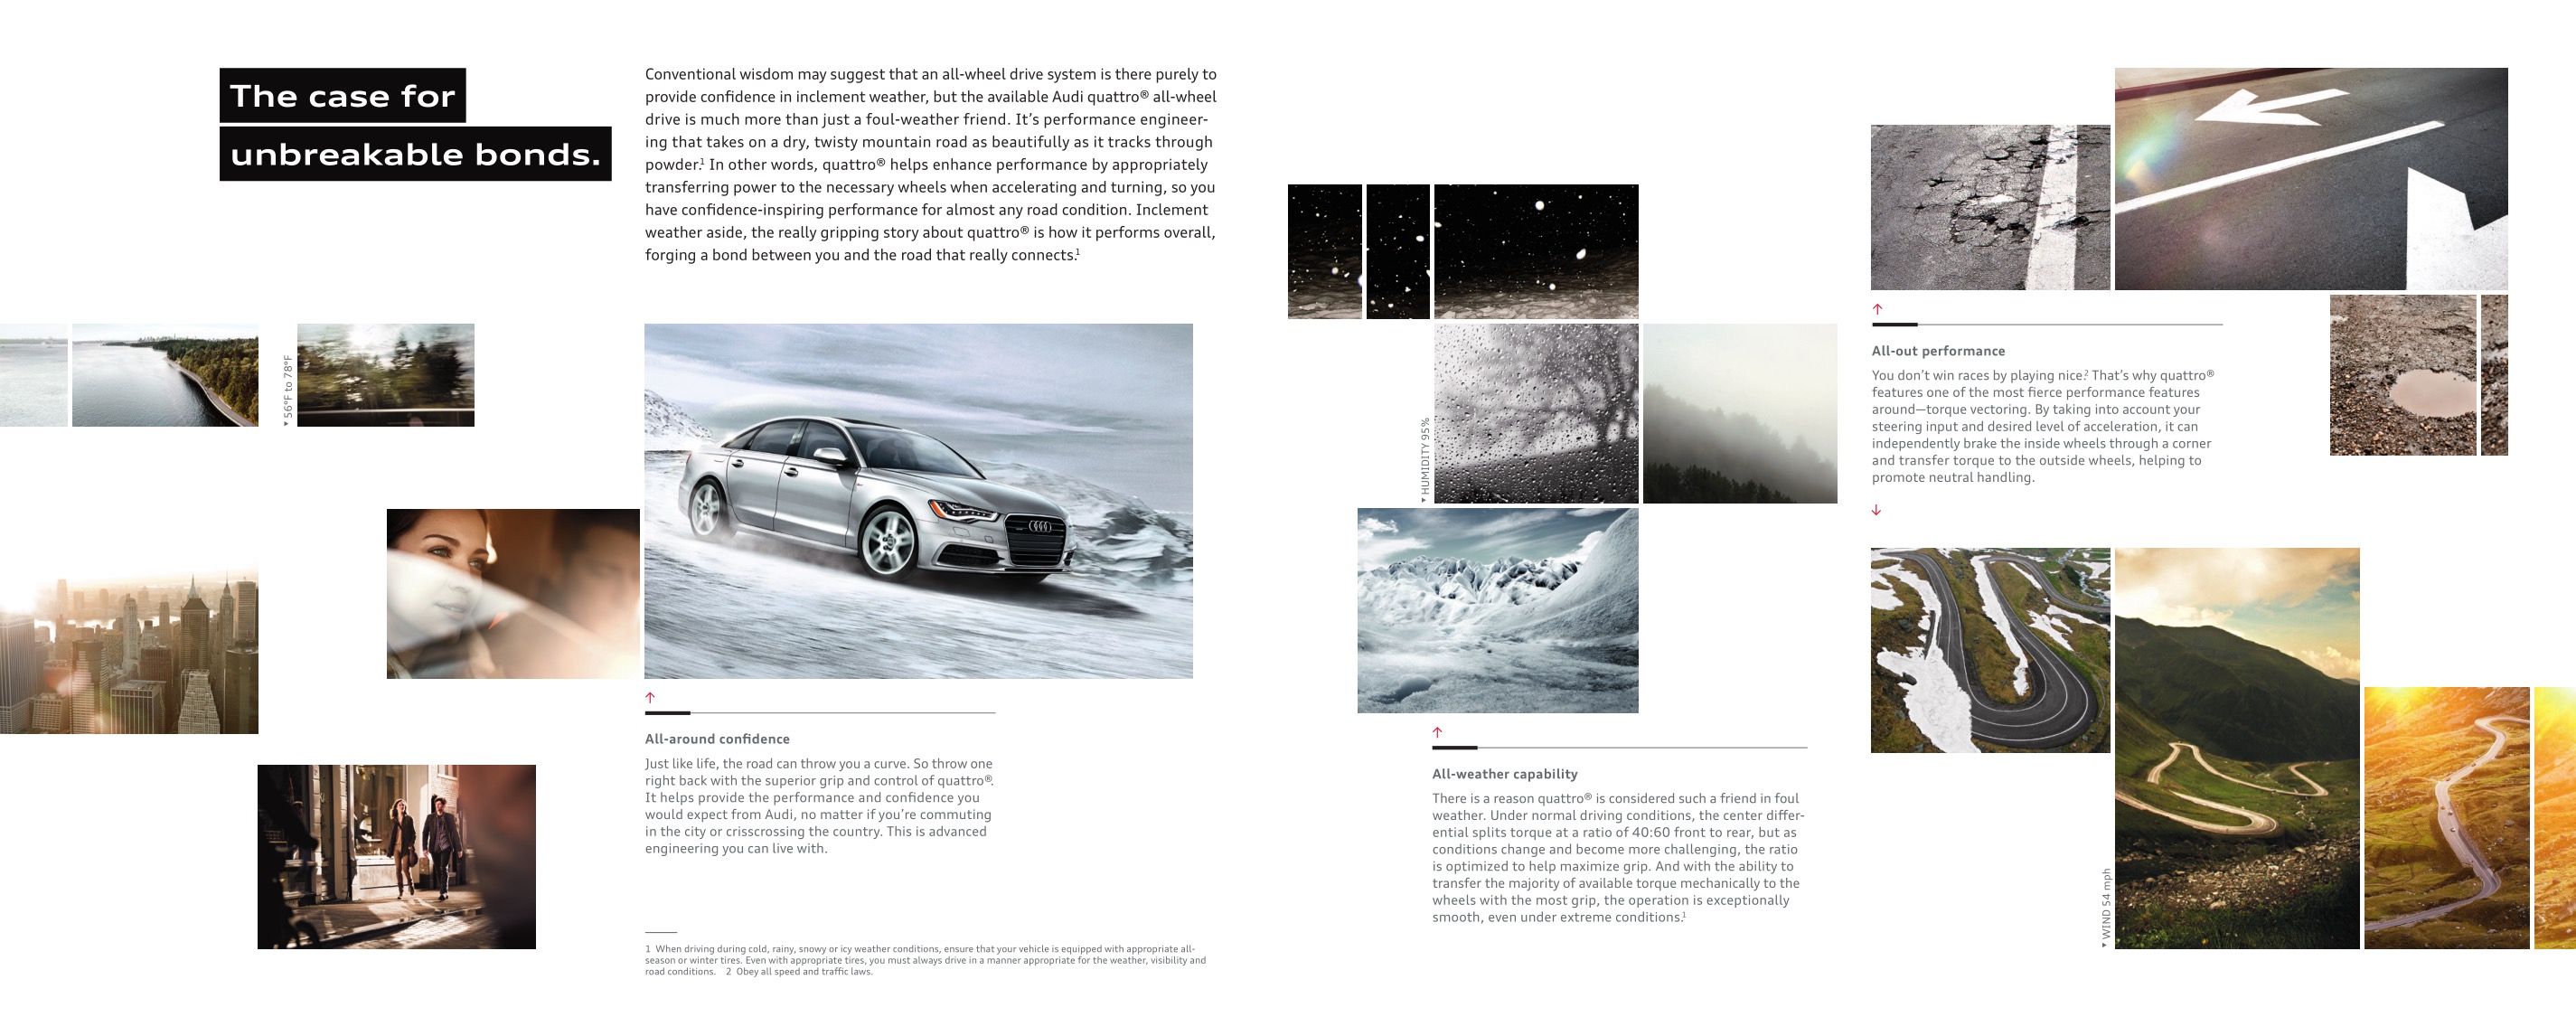 2014 Audi A6 Brochure Page 29